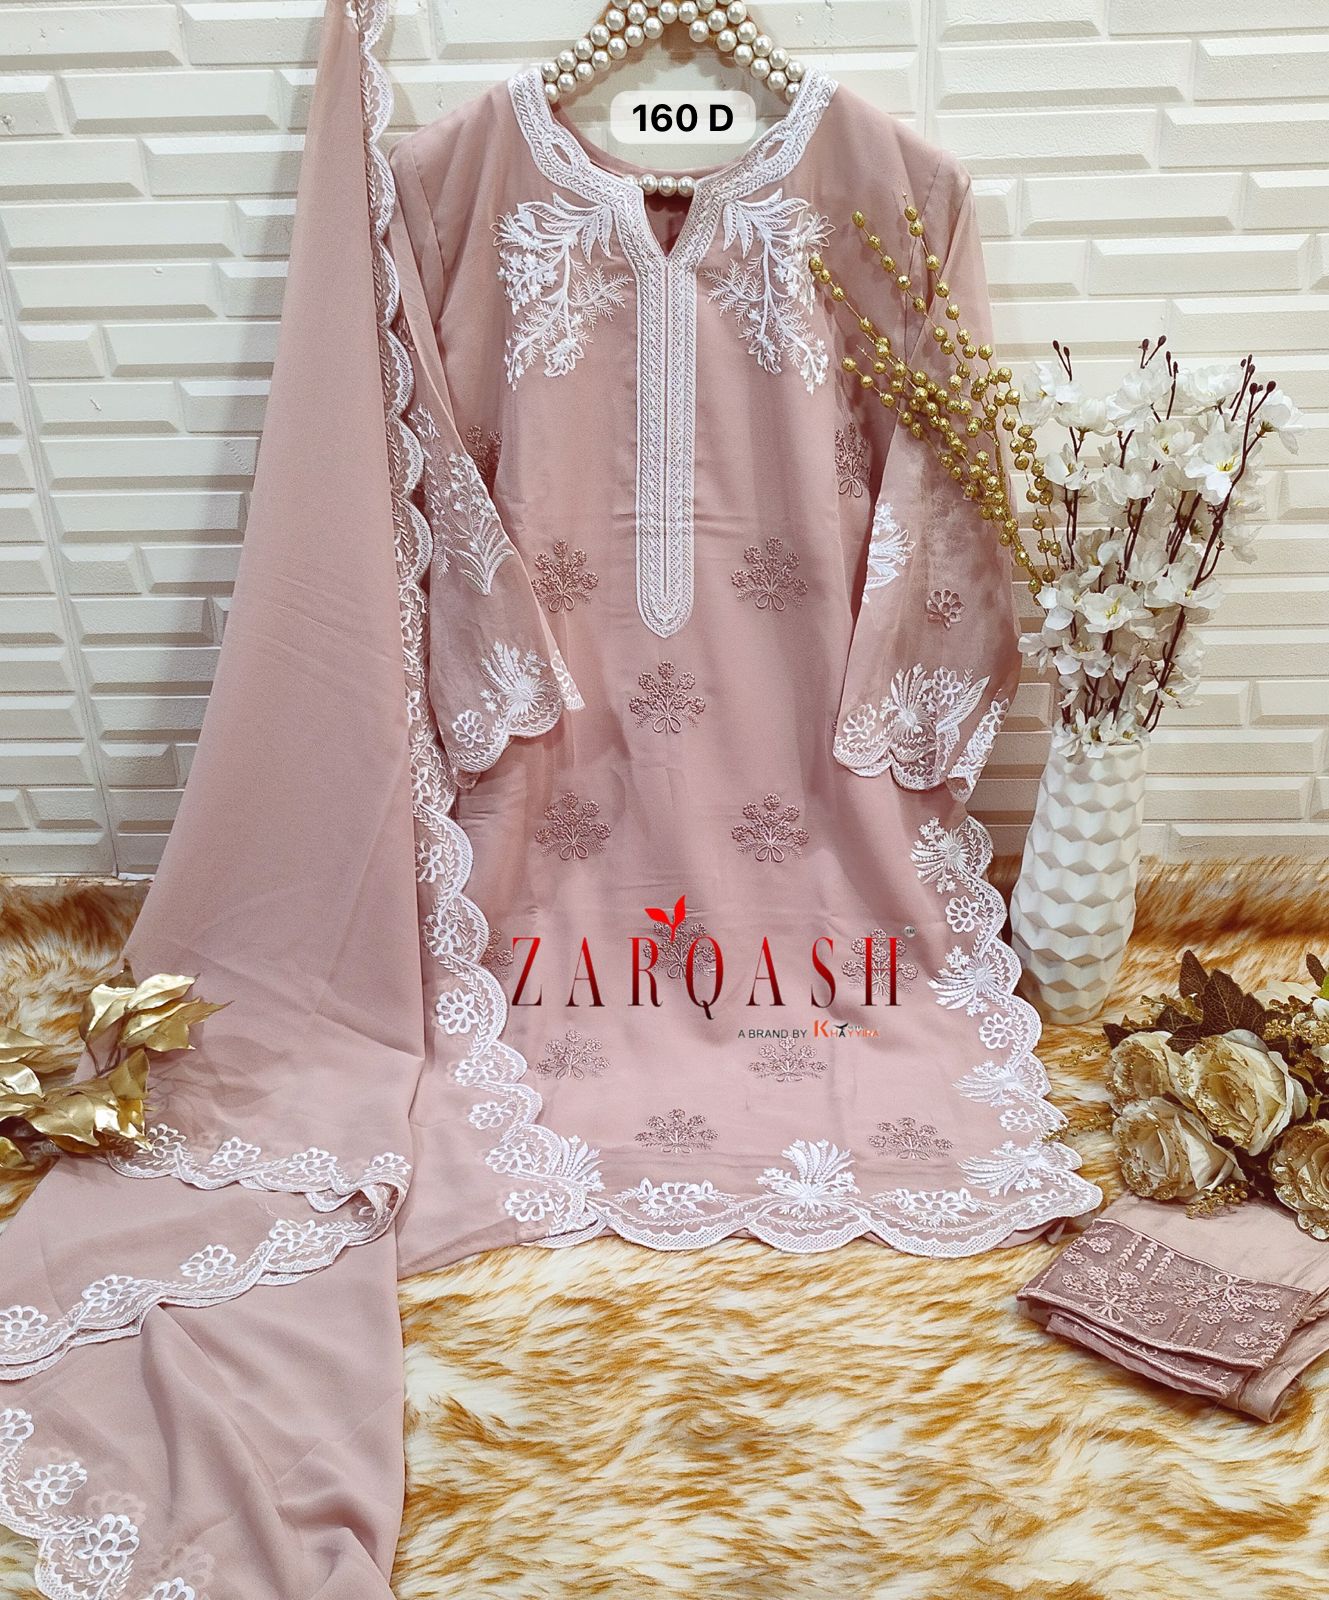 Zarqash Z 160 collection 2